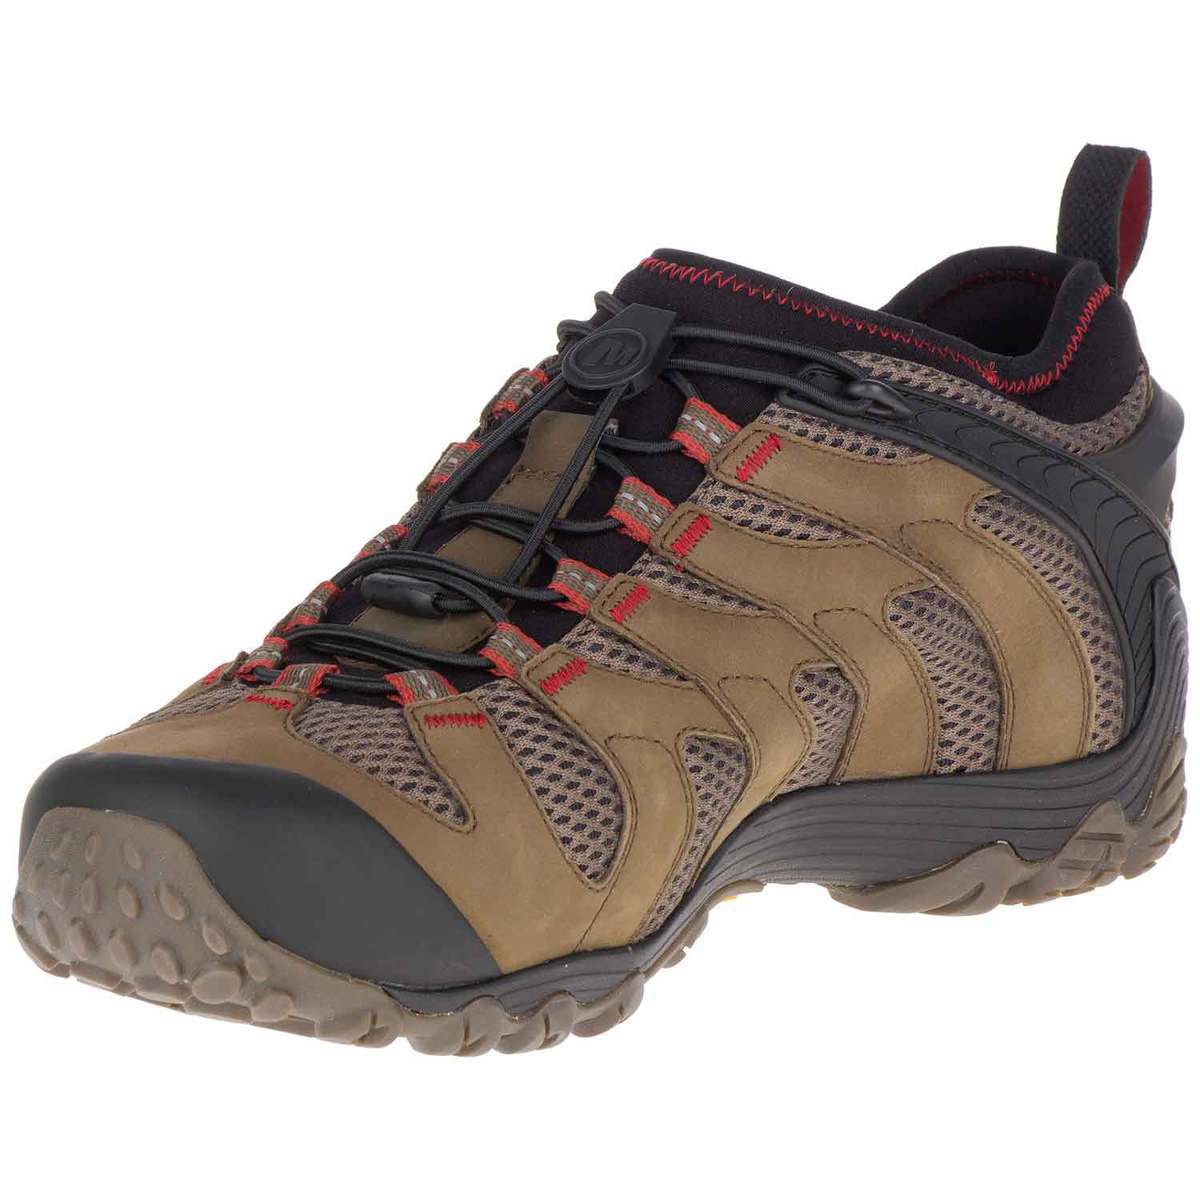 Merrell Men's Chameleon 7 Stretch Low Hiking Shoes - Boulder - Size 7.5 ...